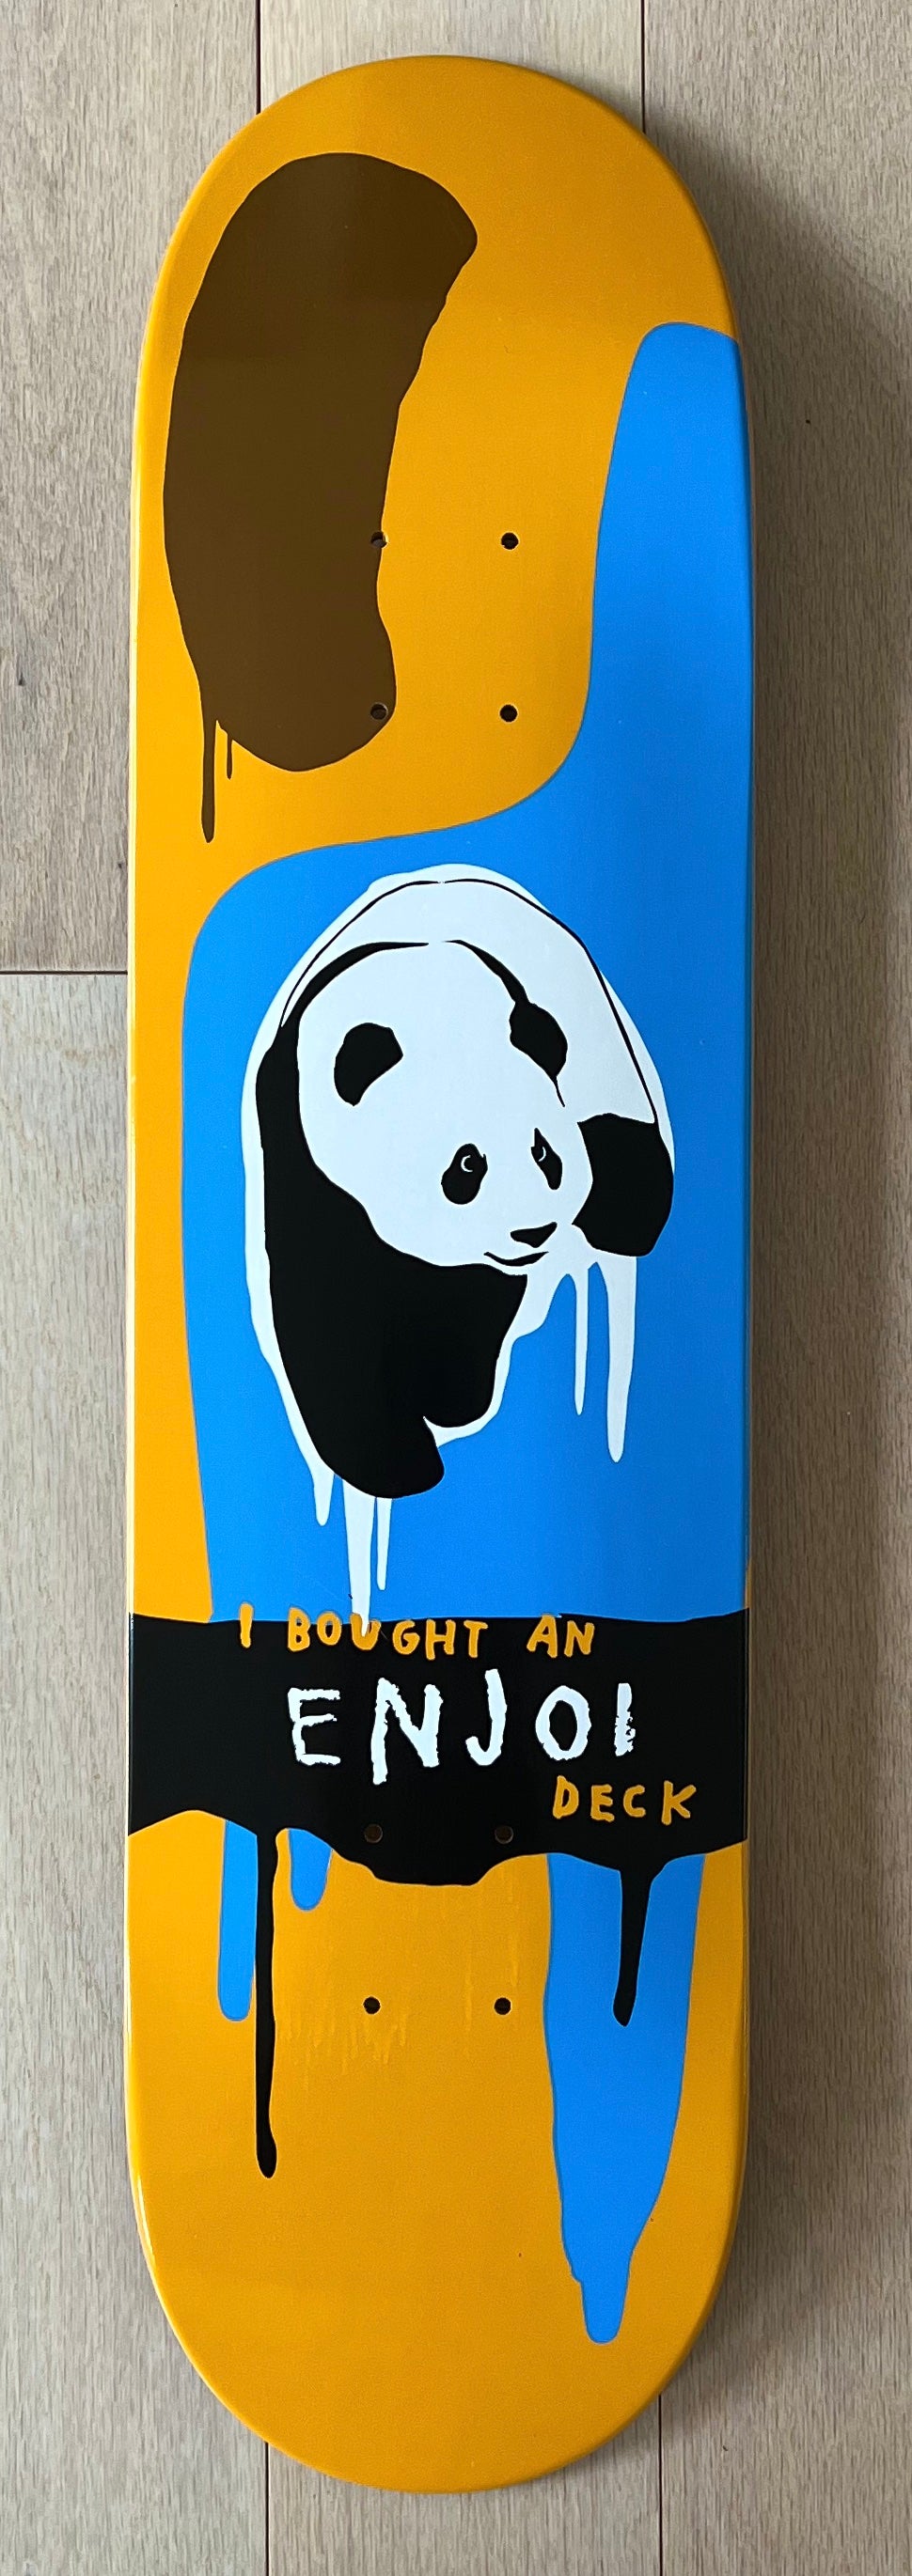 Marc Johnson x Enjoi, "Bought Panda", 2001